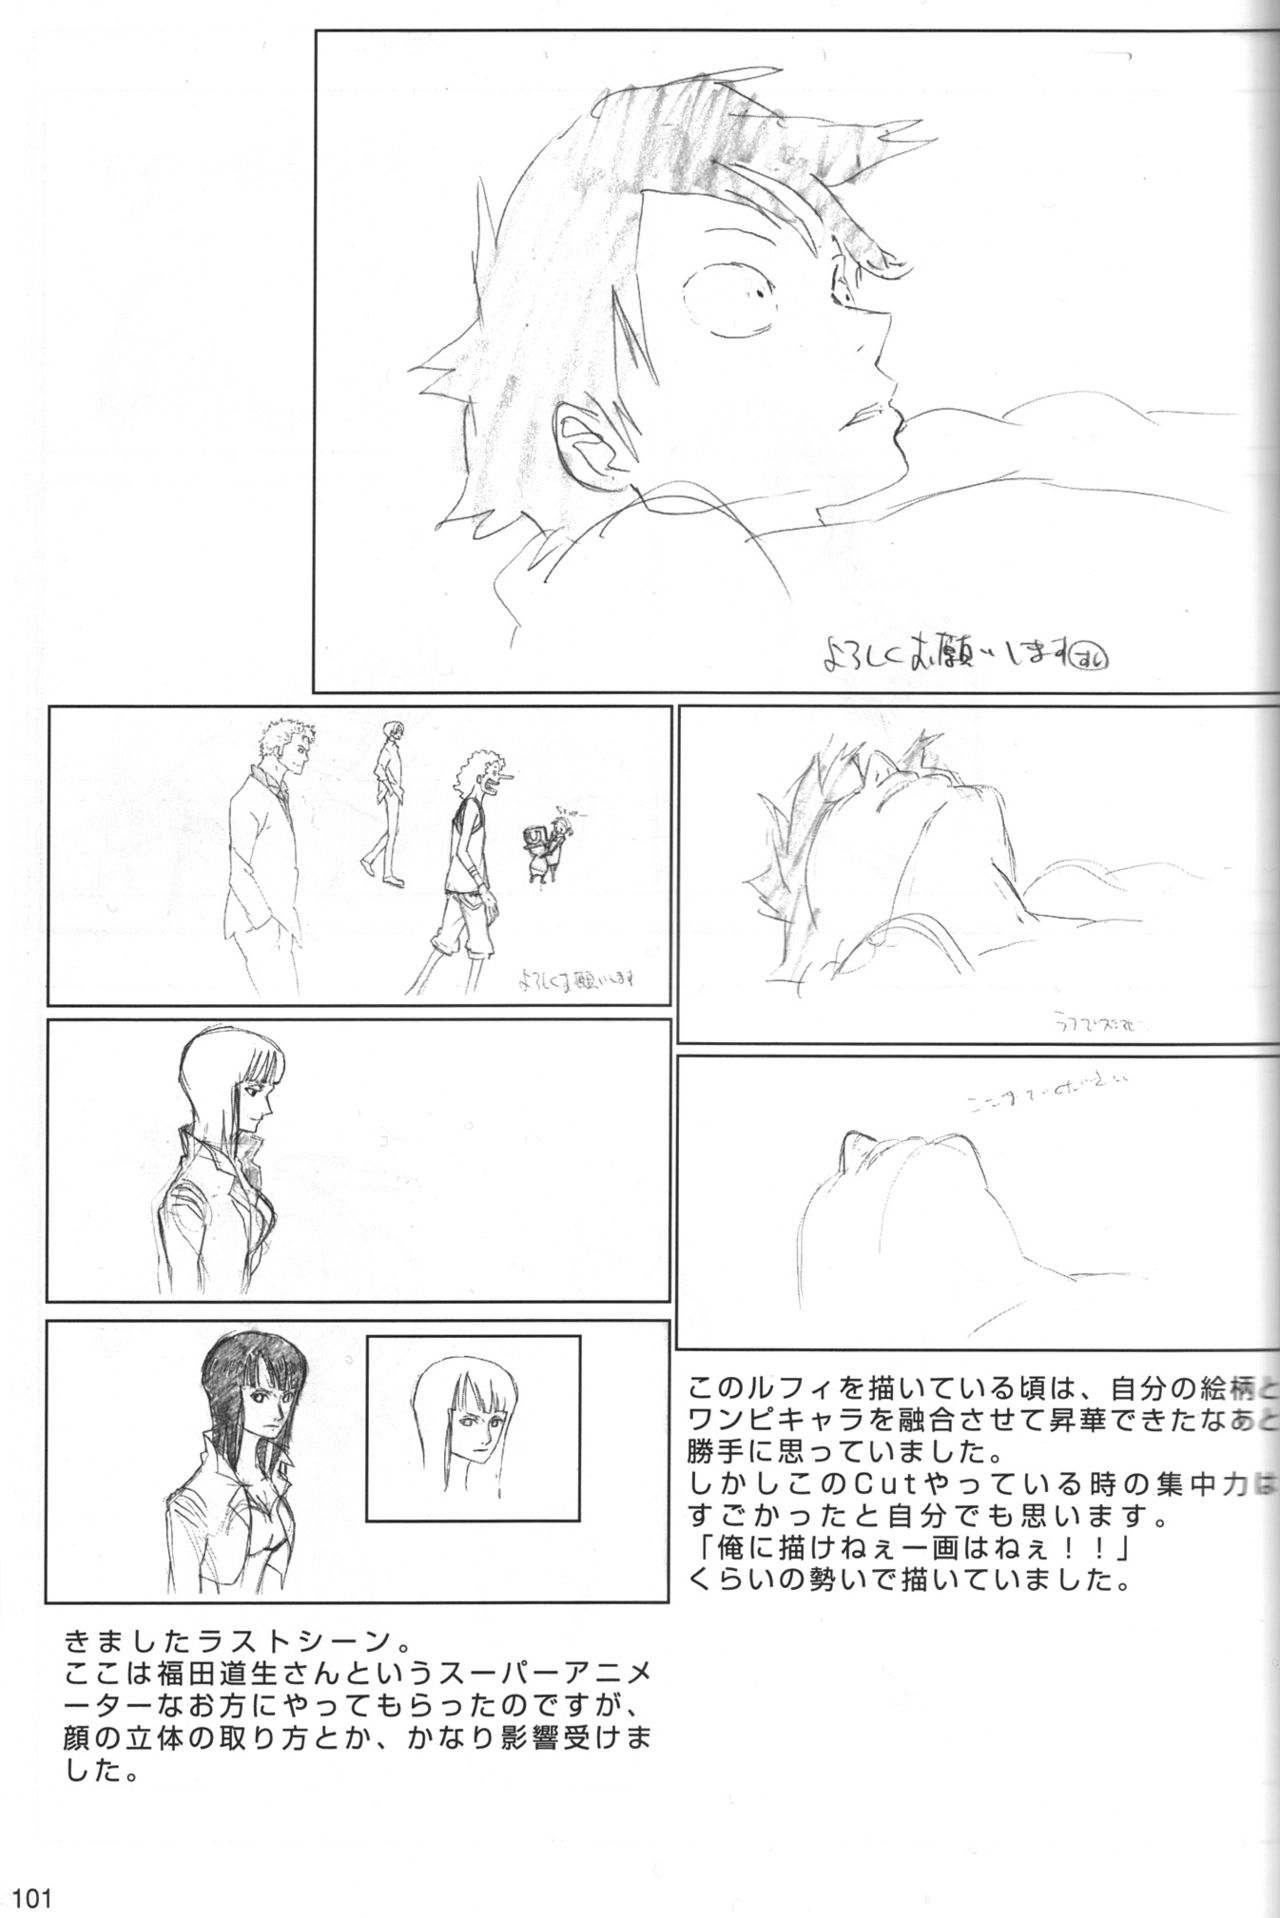 [Artbook] Sushio One Piece Movie 06 - Pencil Test and Design Book 99